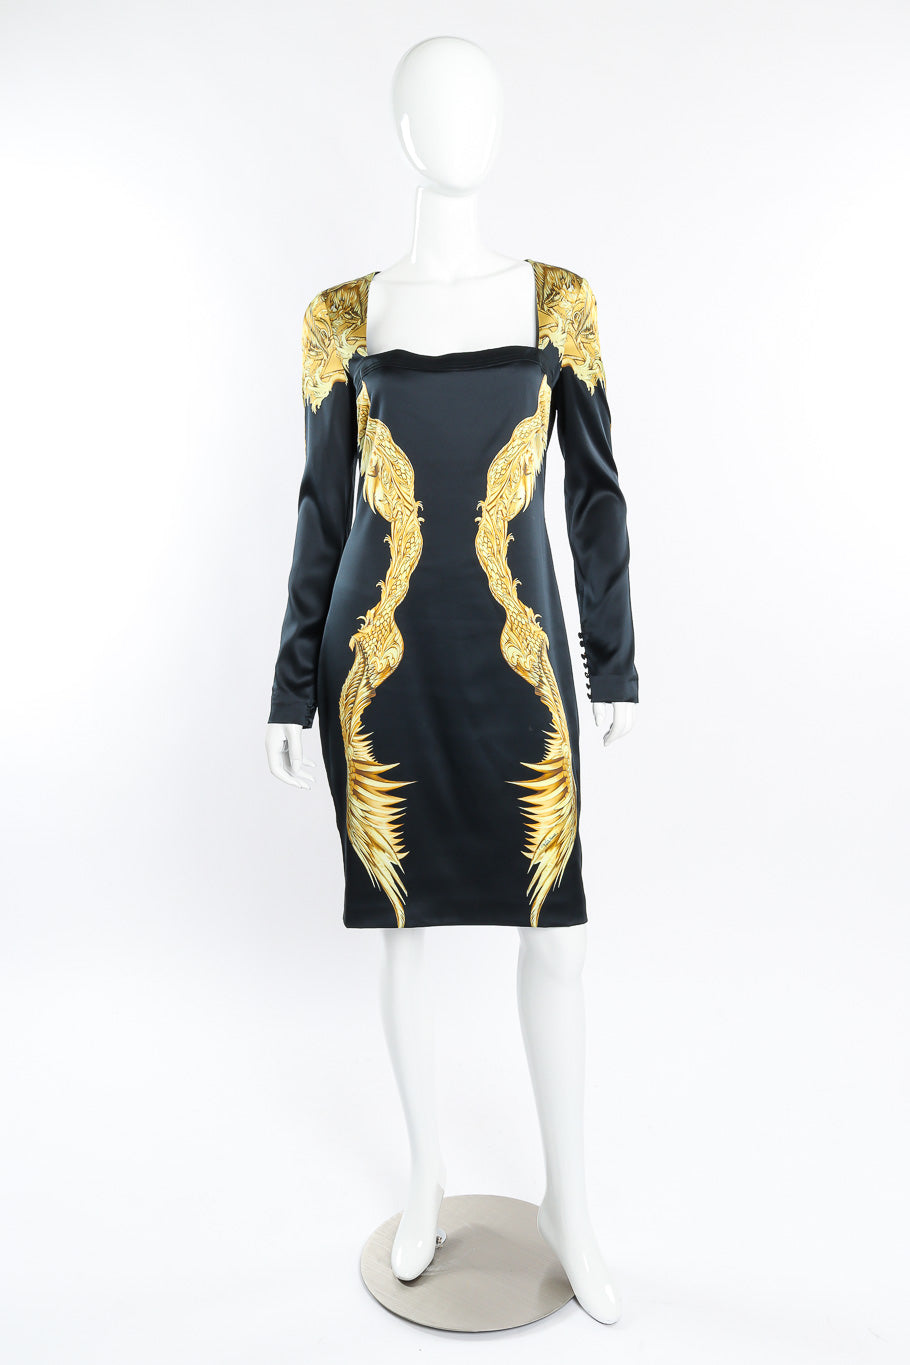 Roberto Cavalli Baroque Wings Graphic Silk Dress front view on mannequin @Recessla